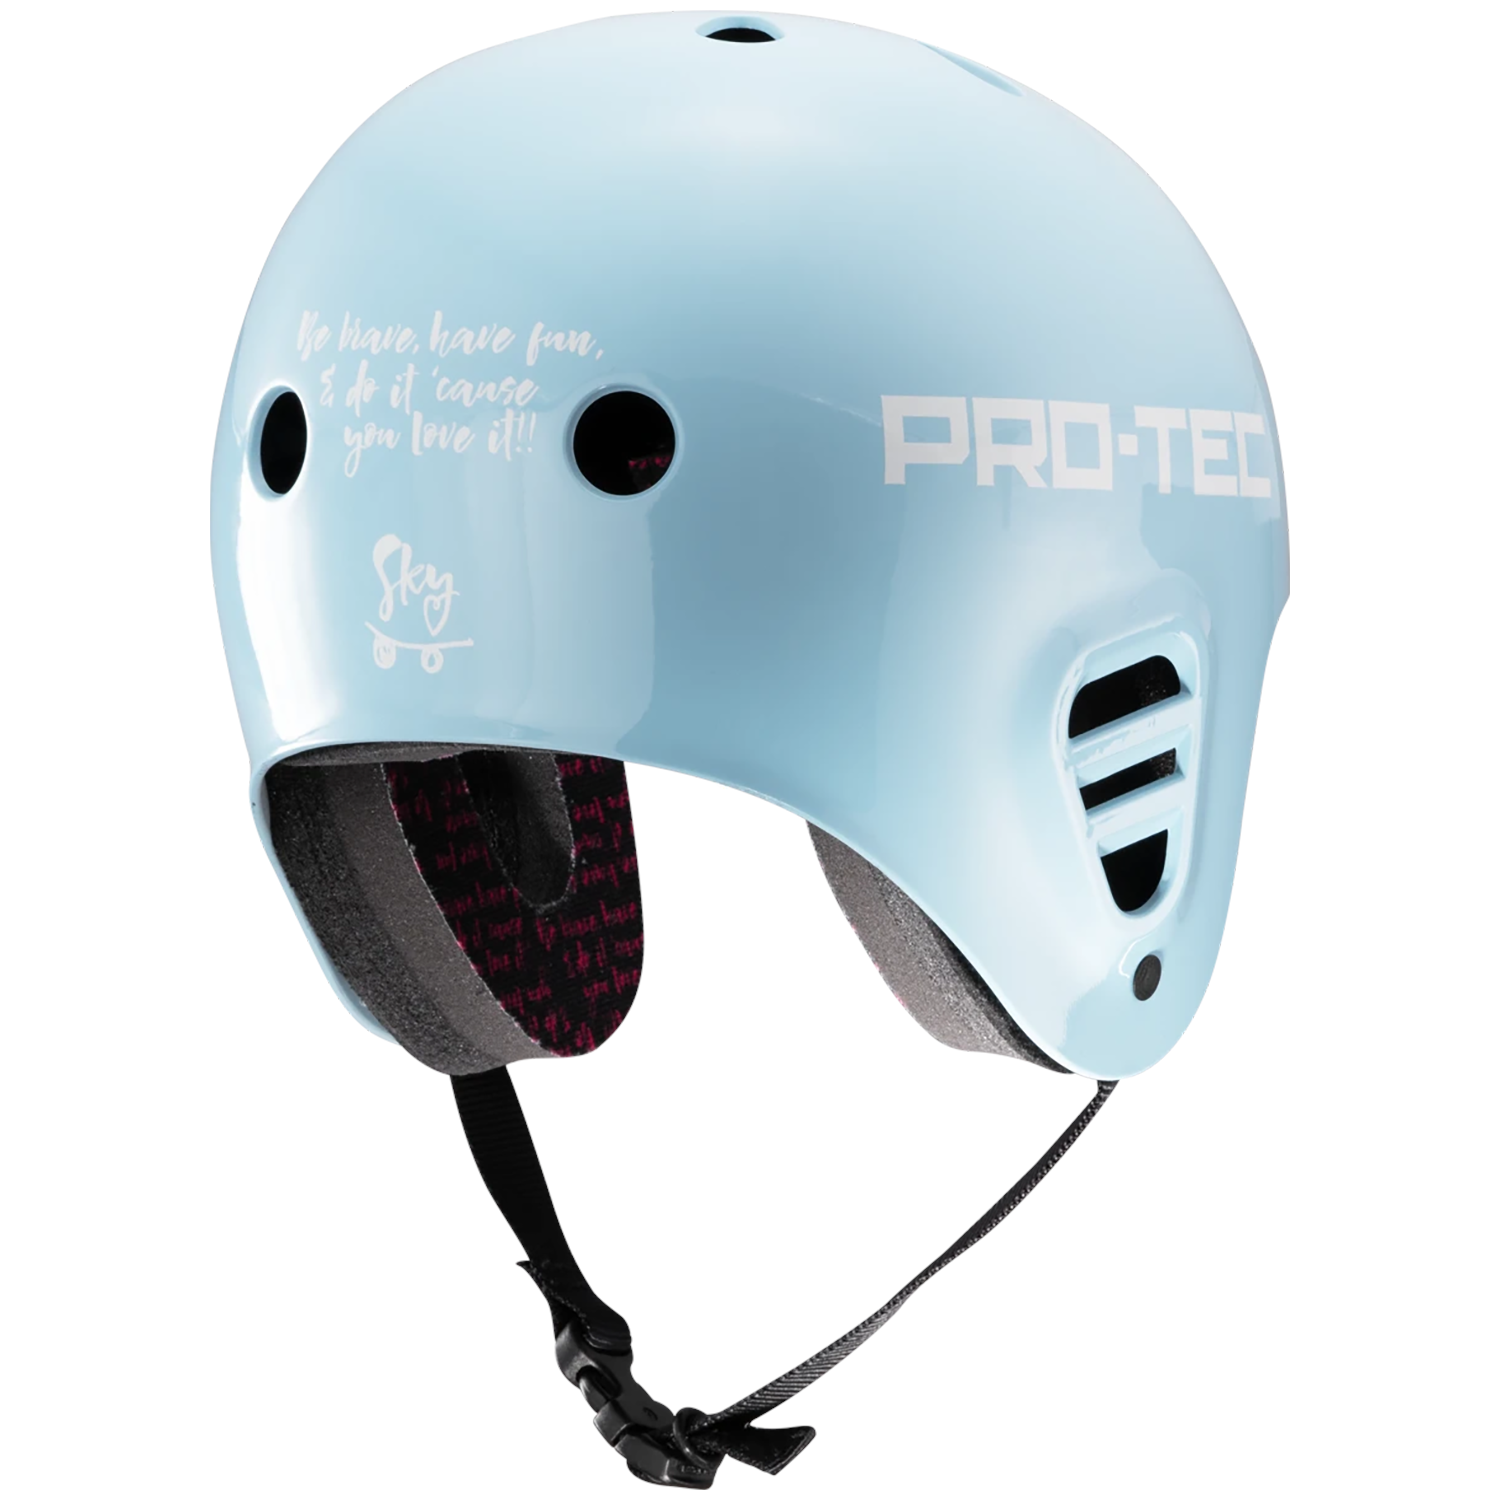 Details about   Pro-Tec Skate-and-Skateboarding-Helmets Pro-Tec Full Cut Skate Helmet Small 